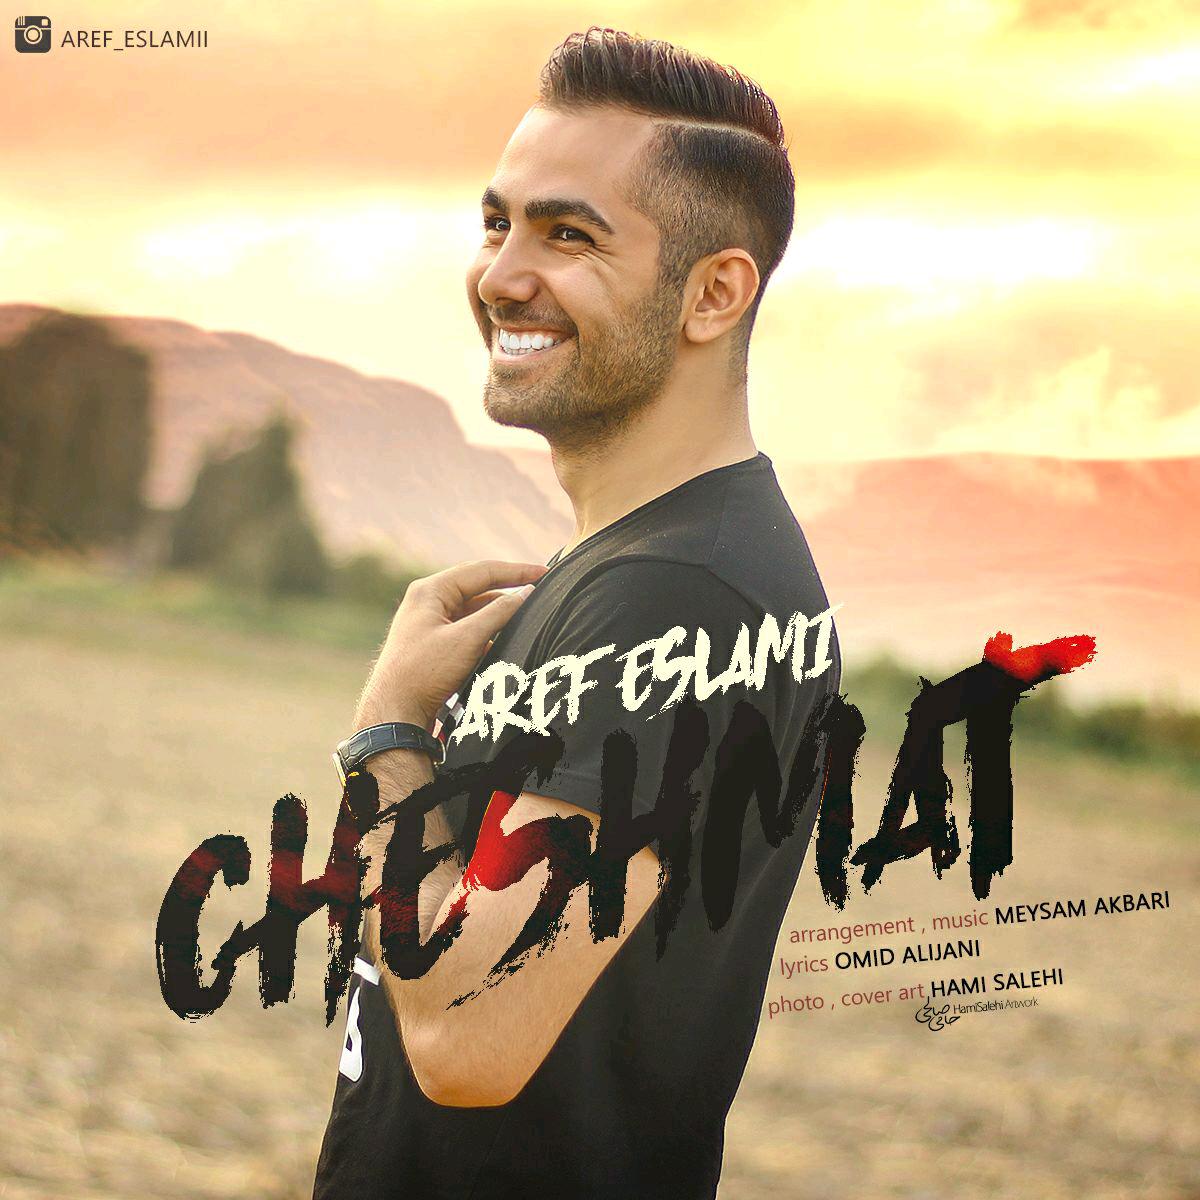 Aref Eslami – Cheshmat